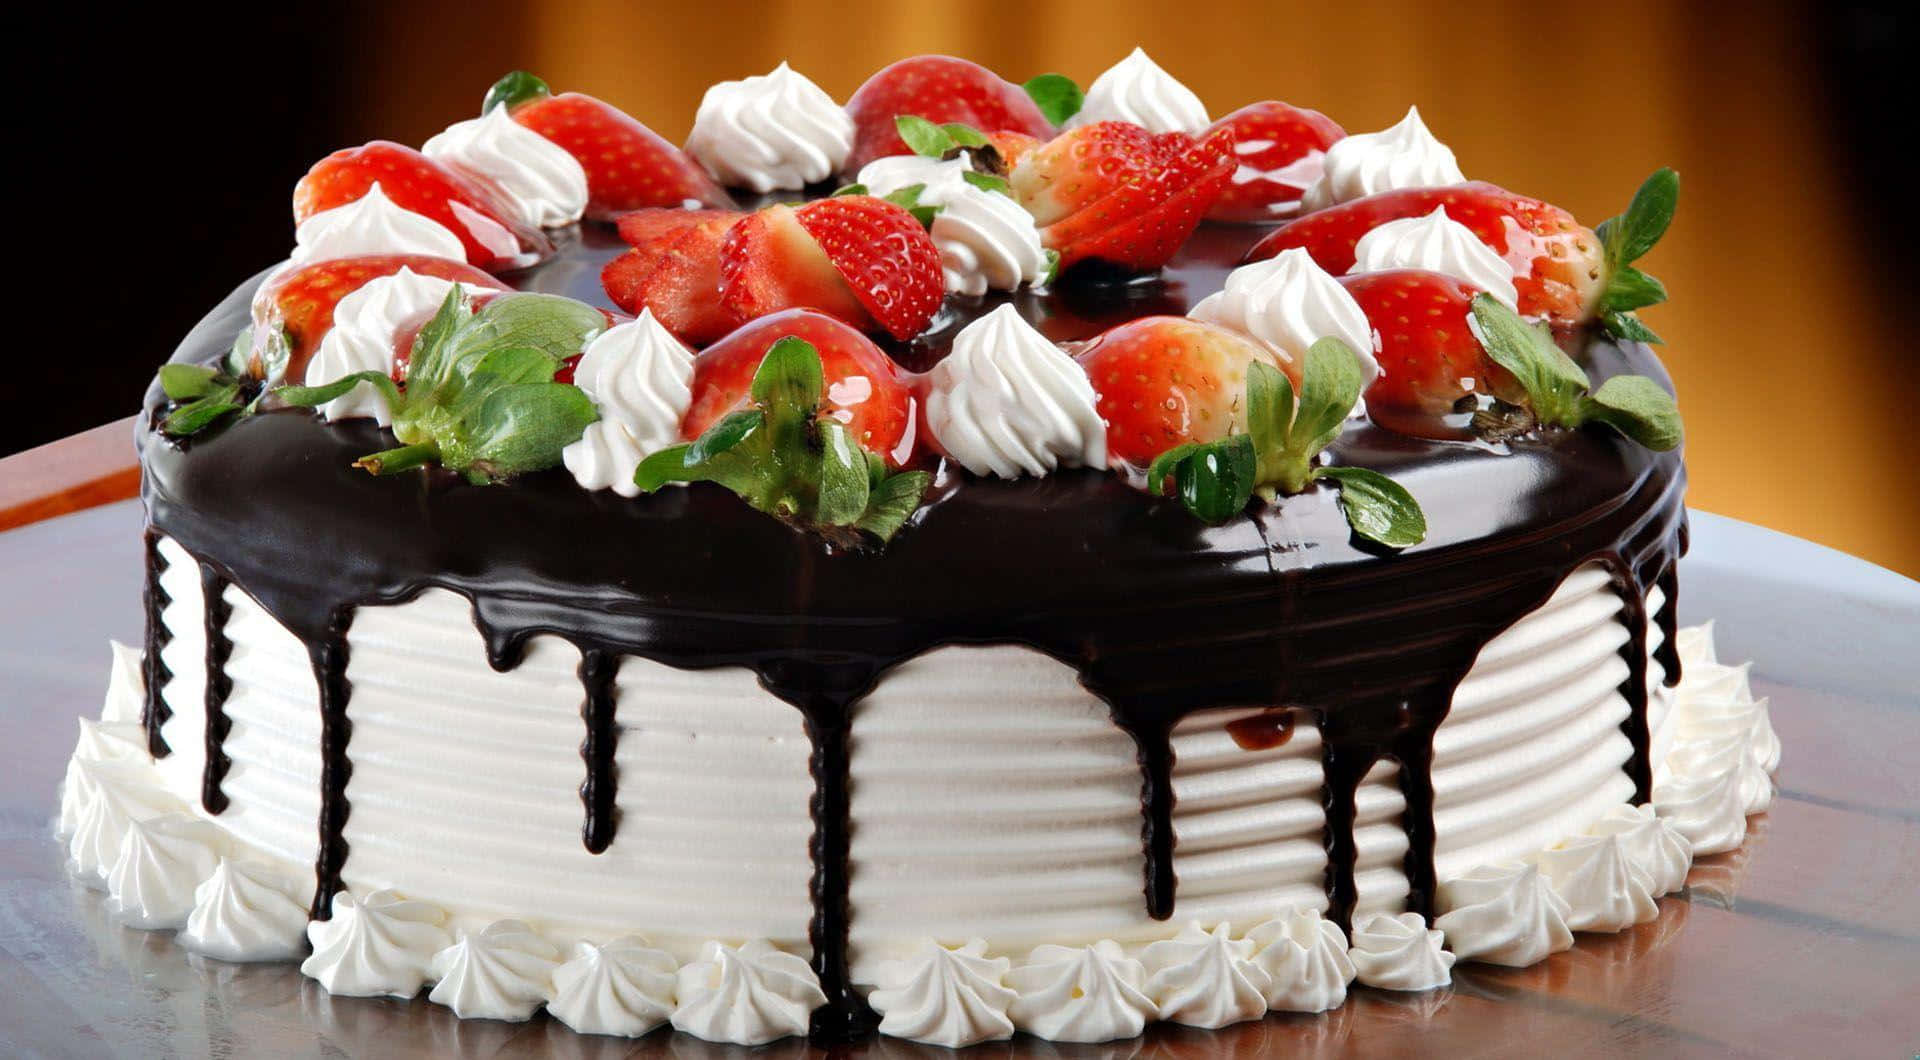 A Deliciously Delicious Birthday Cake